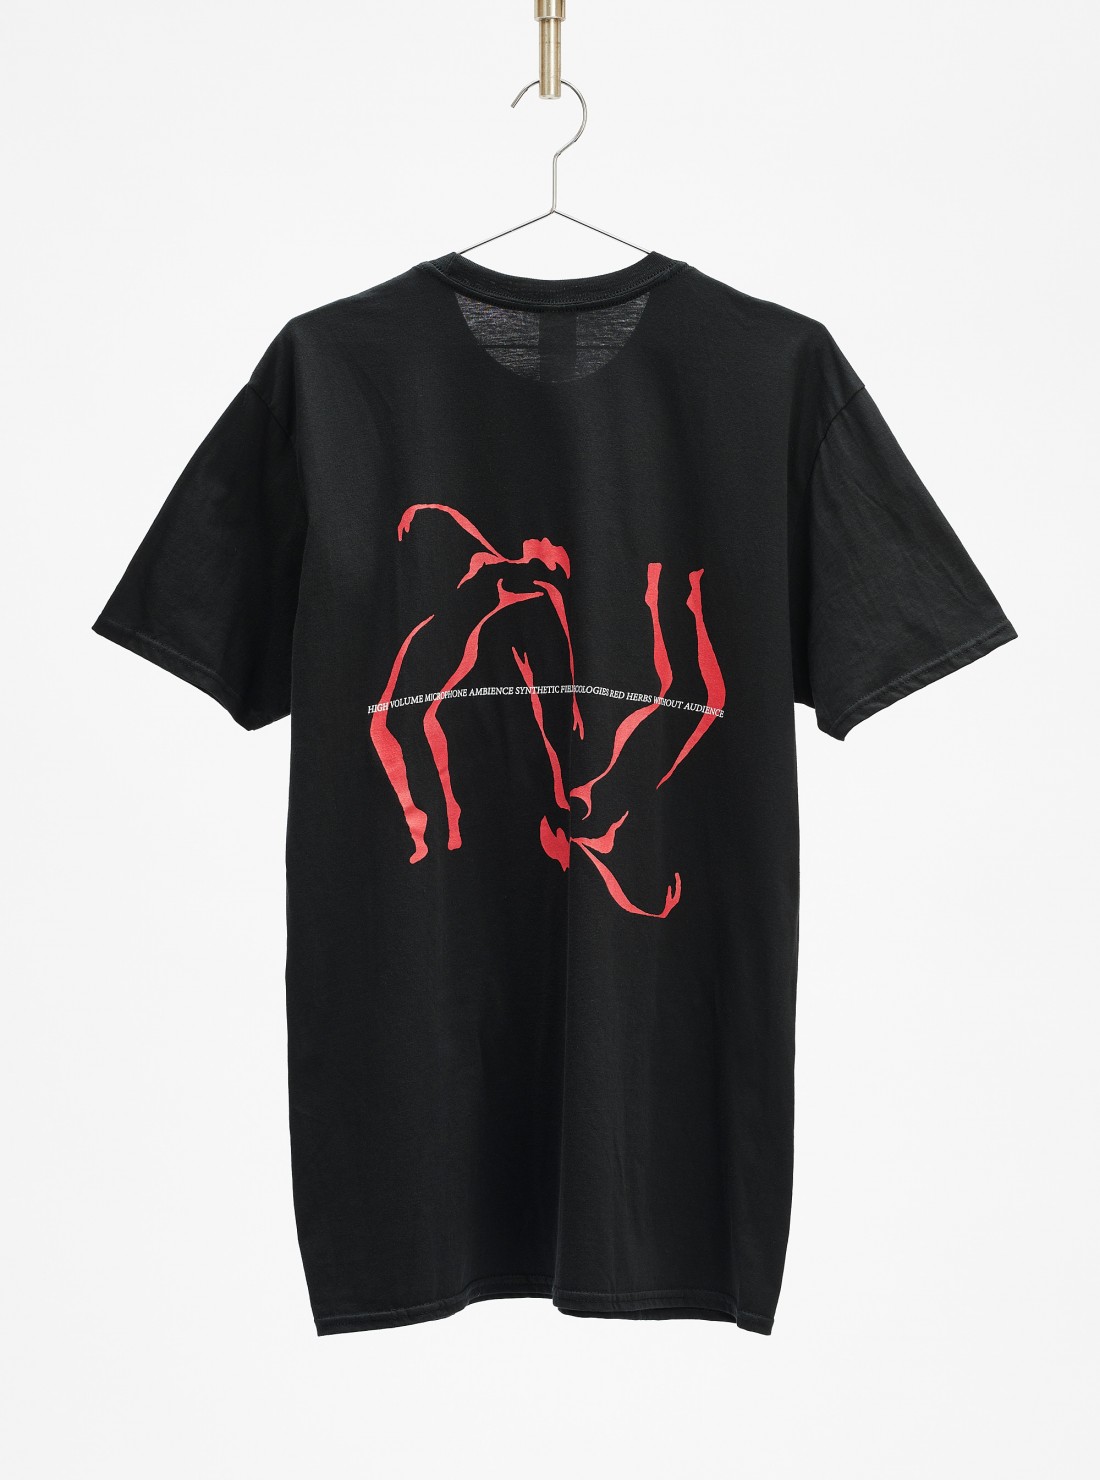 Red ants genesis t-shirt